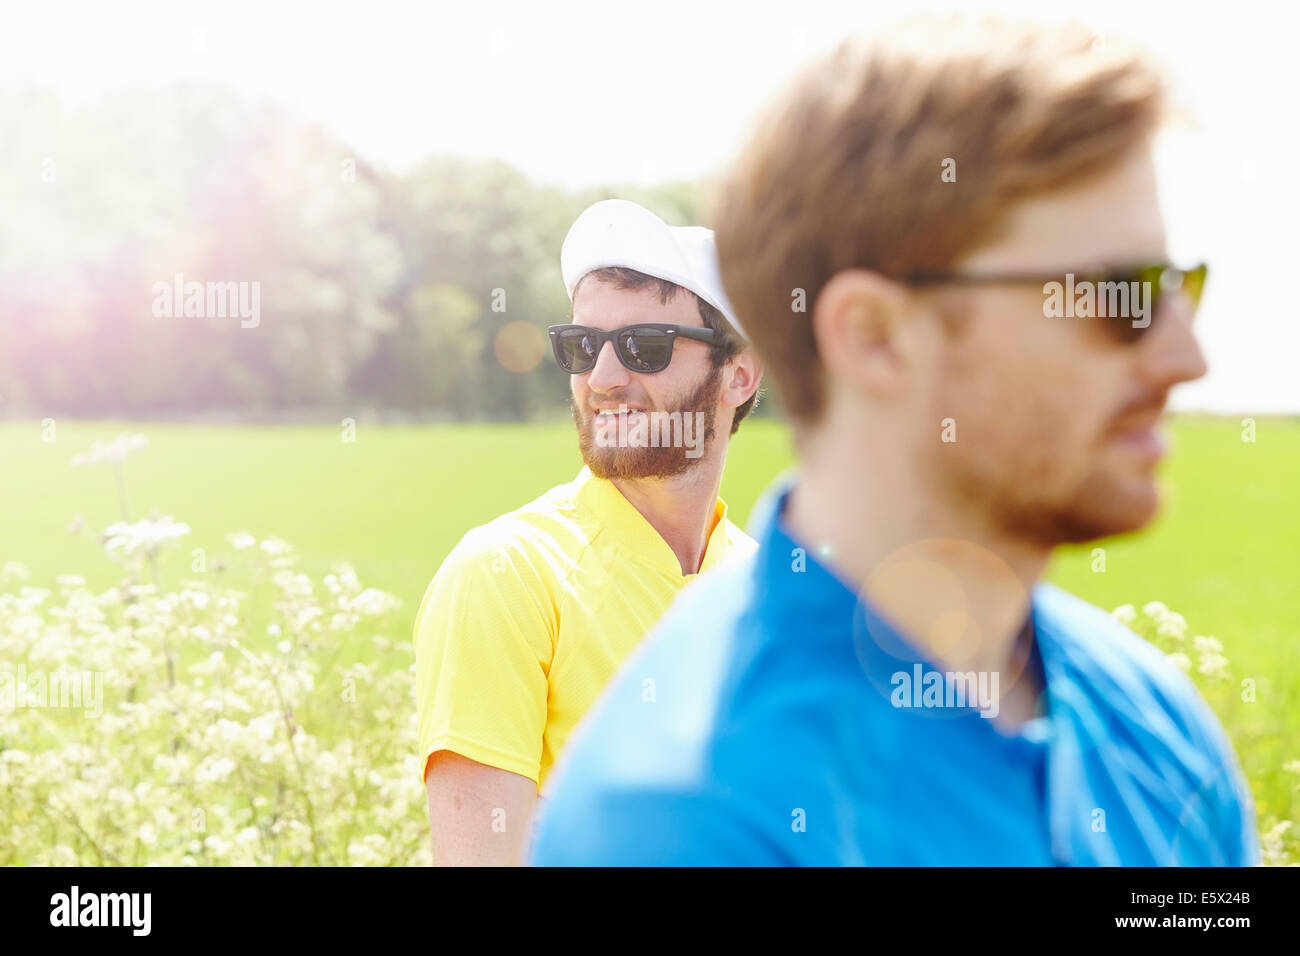 Cyclists wearing biking cap and sunglasses Stock Photo